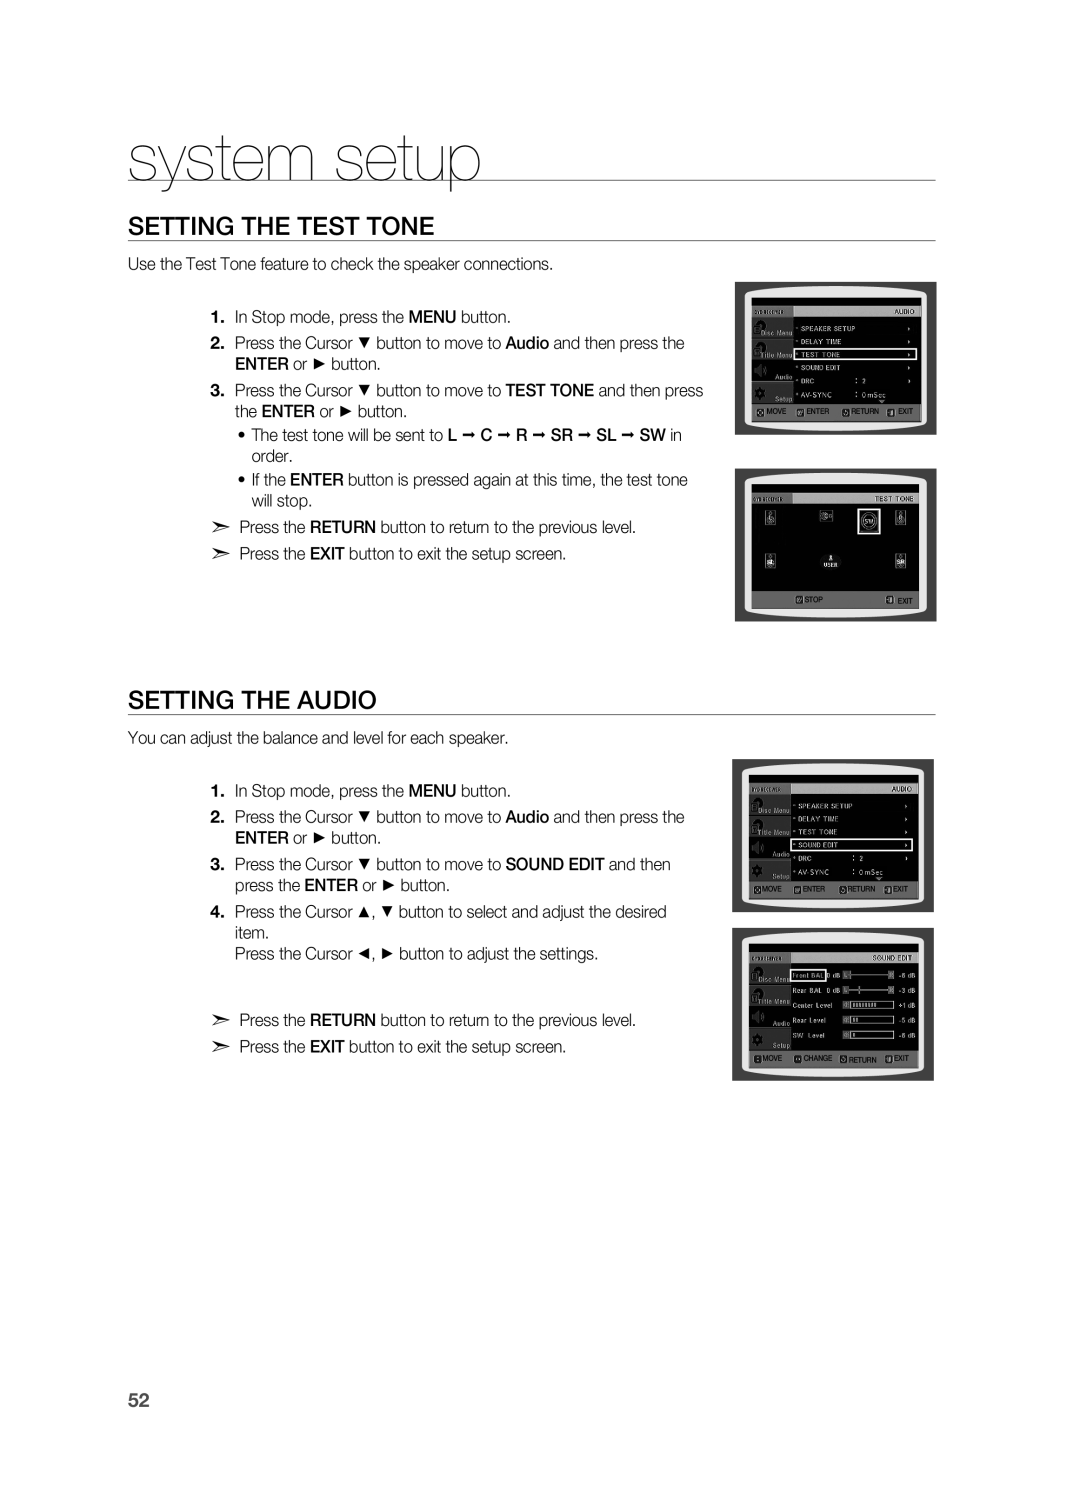 Samsung HT-TX715 user manual Setting the Test Tone, Setting the Audio, system setup 